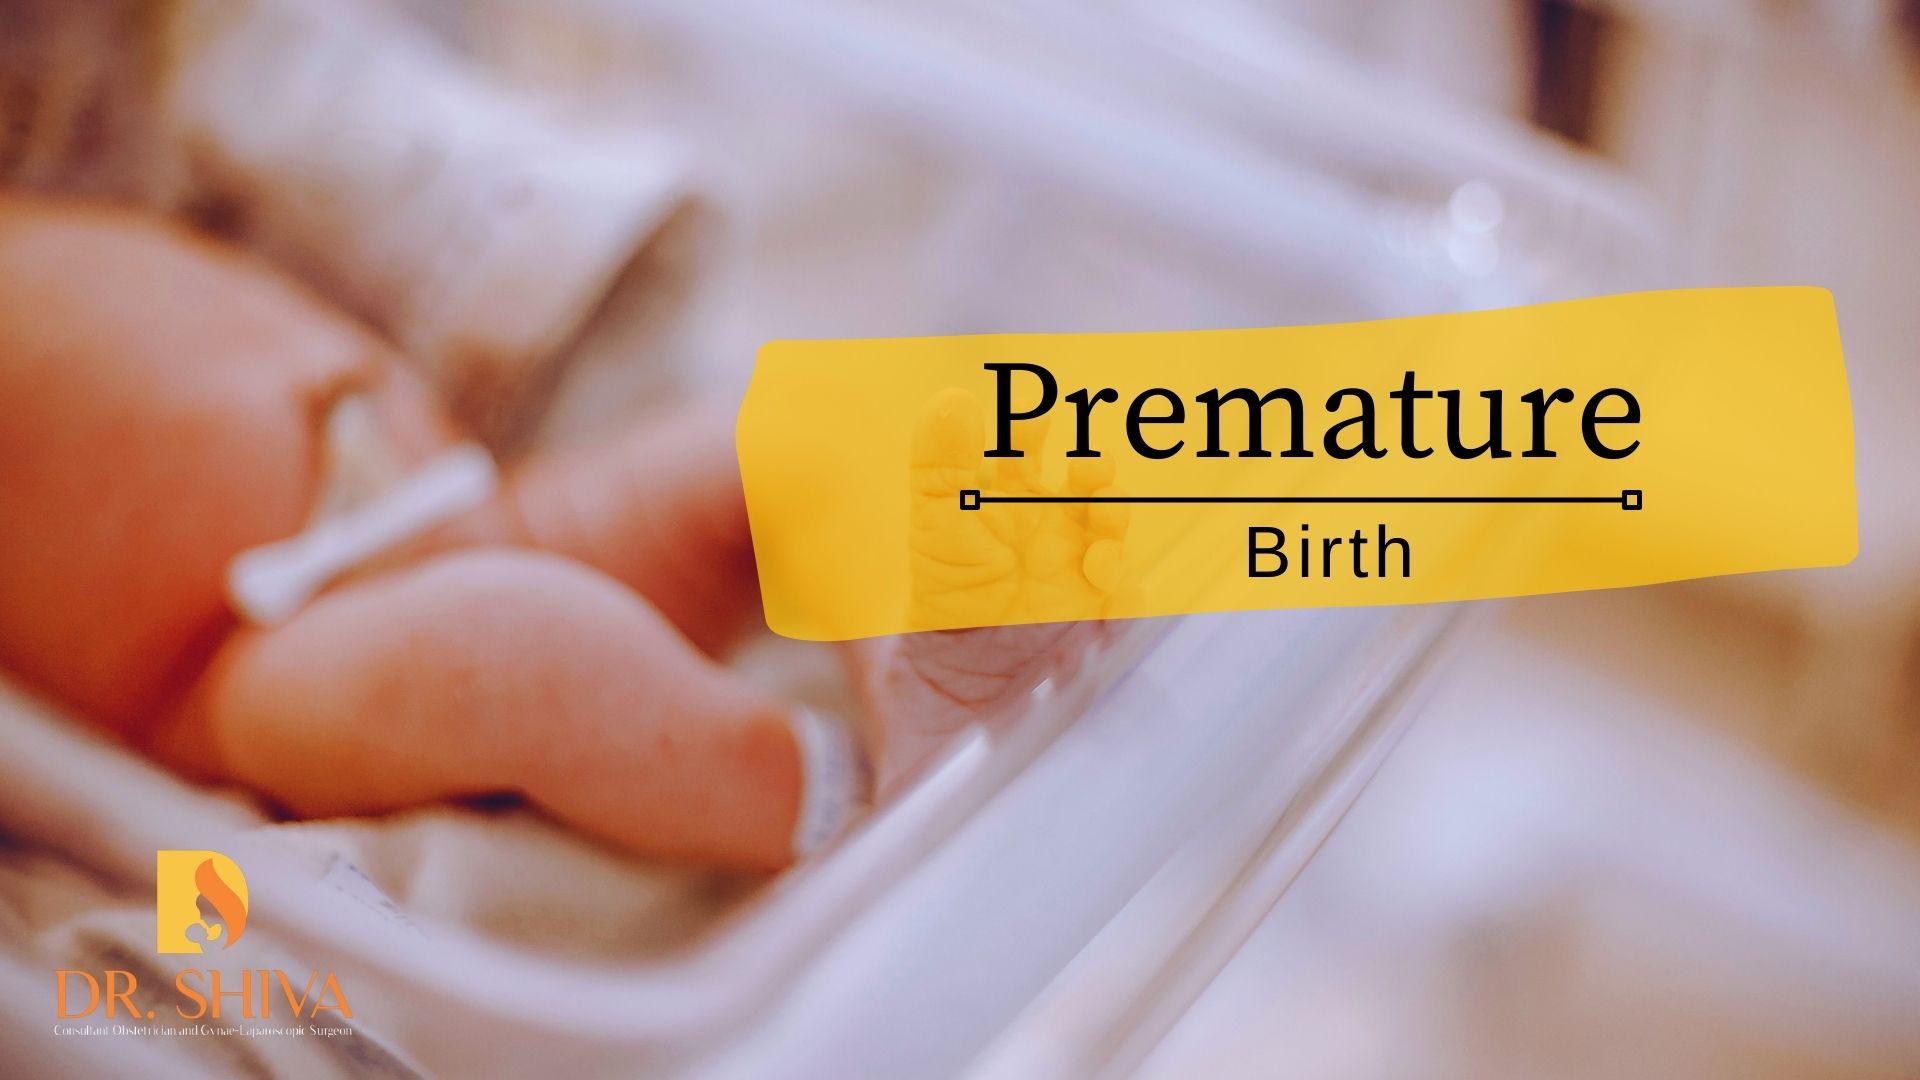 Premature Birth - Dr.Shiva Harikrishnan